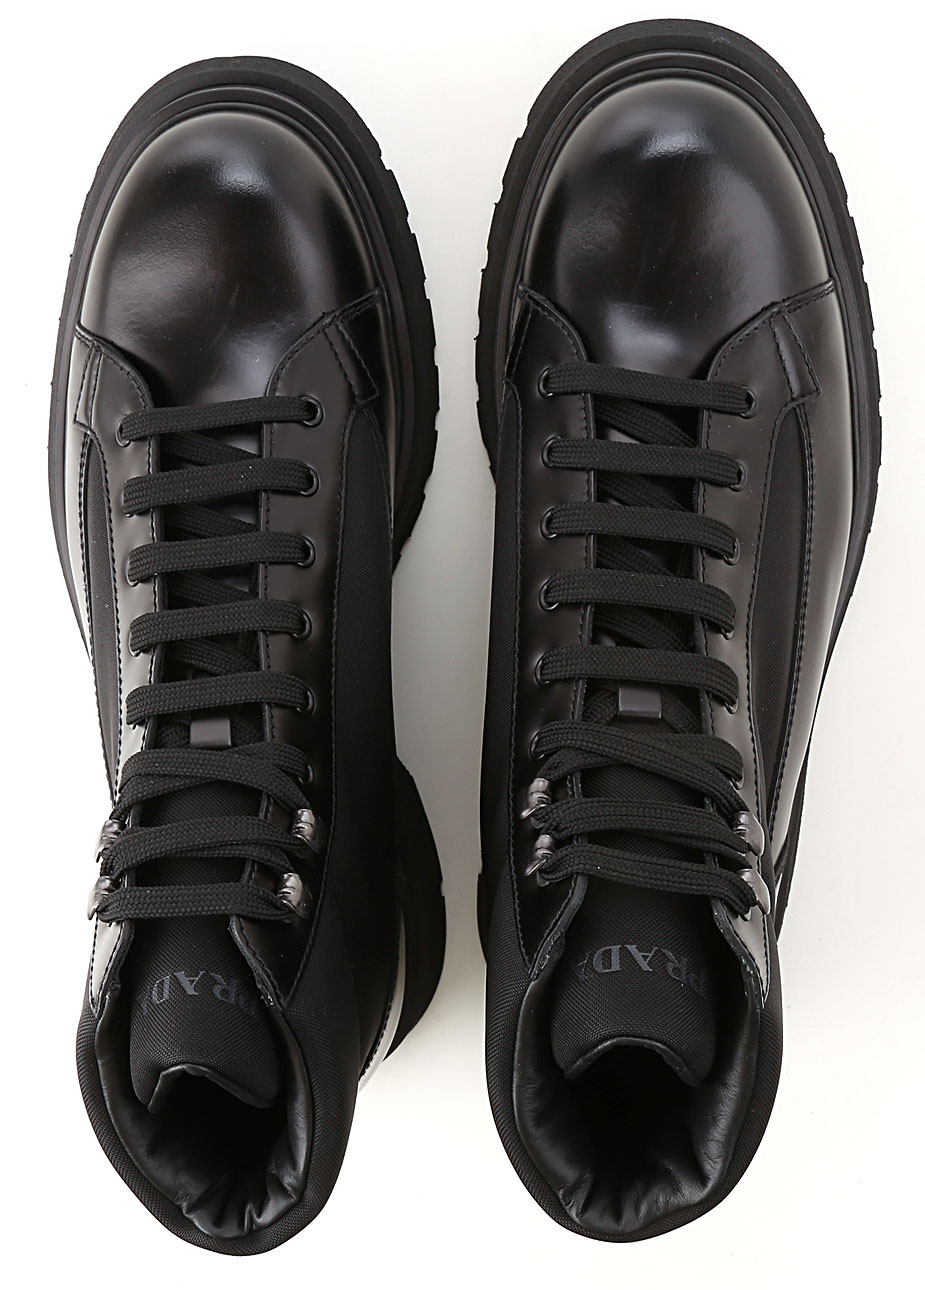 Mens Shoes Prada, Style code: 2te148-3kzp-f0002